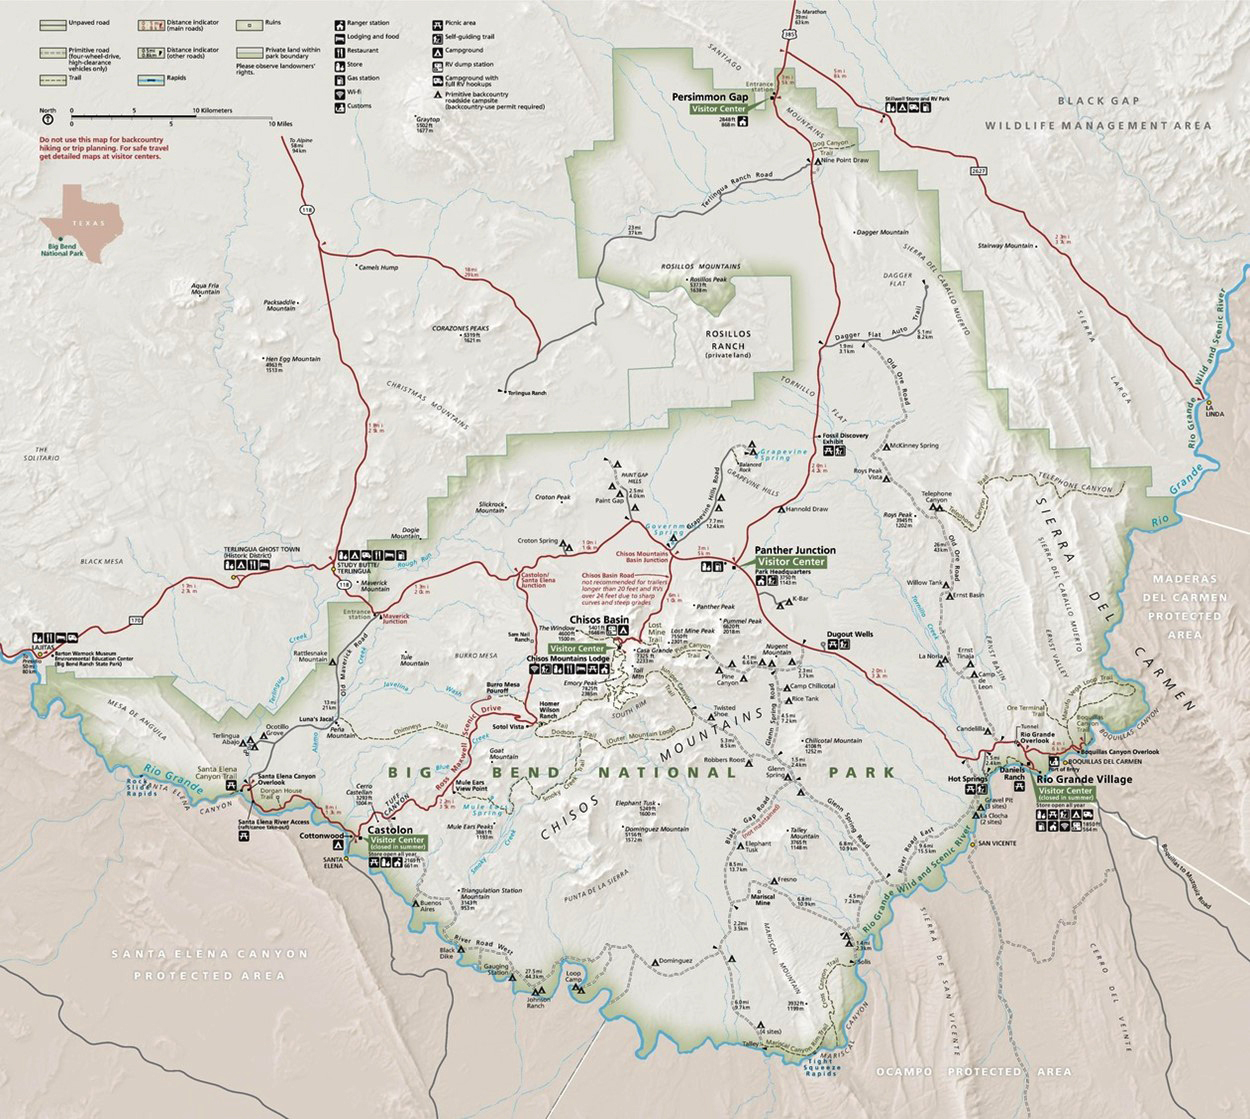 Official National Park Service map of Big Bend National Park